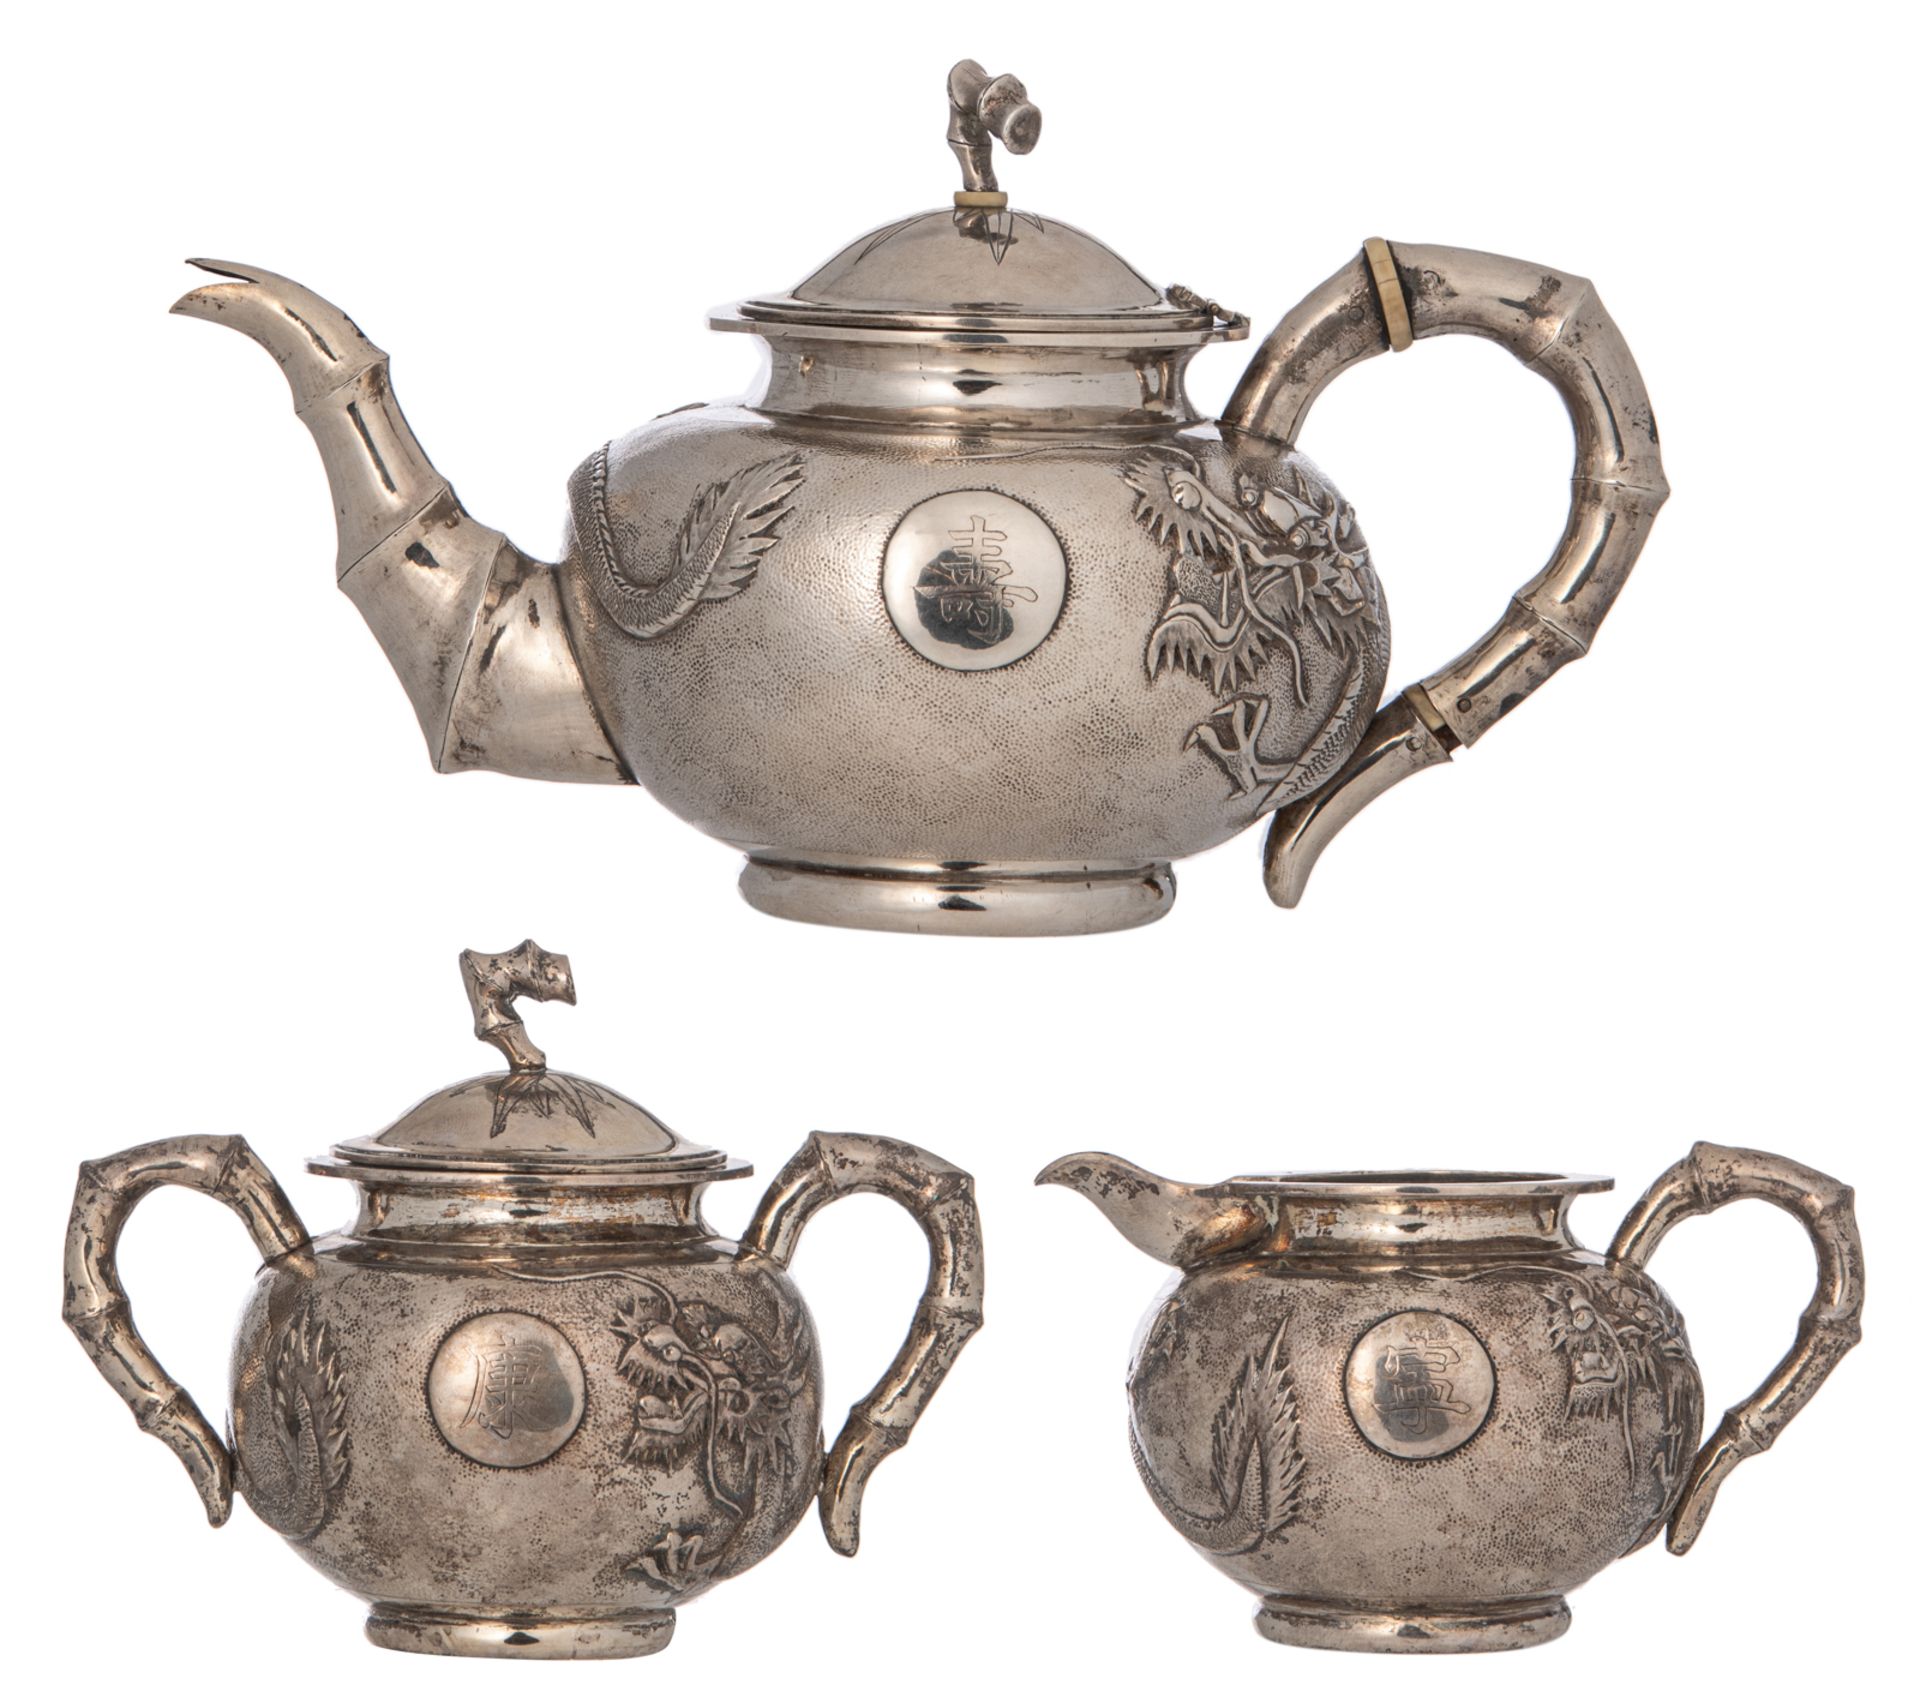 A Chinese three-piece silver tea set with dragon design, marked 'Yok Sang', Shanghai, H 4,5 - W 25,5